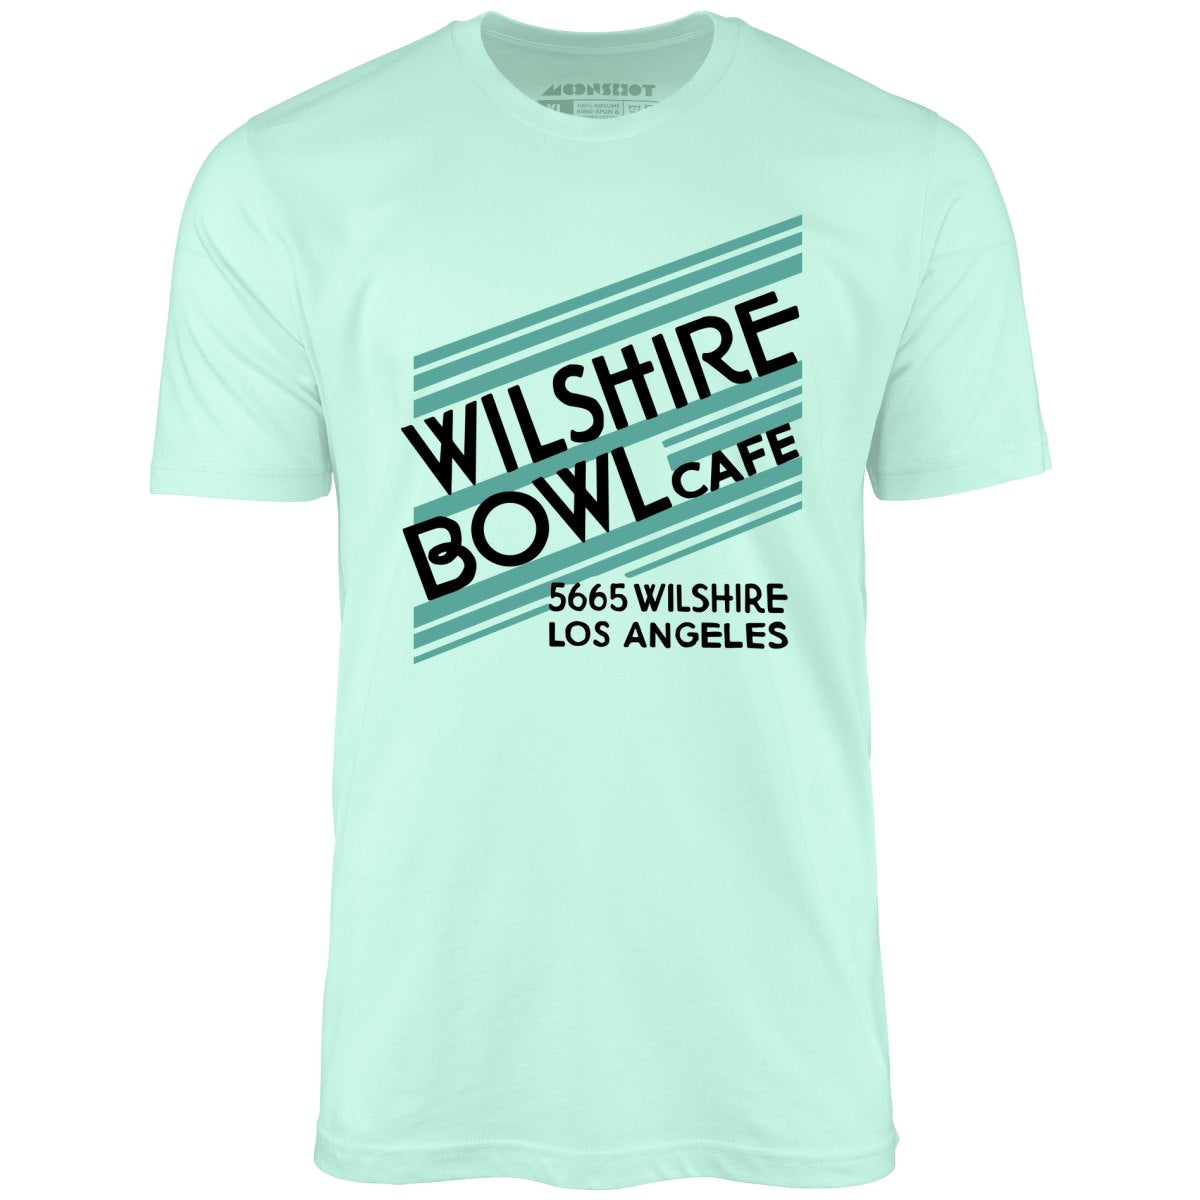 Wilshire Bowl Cafe - Los Angeles, CA - Vintage Restaurant - Unisex T-Shirt